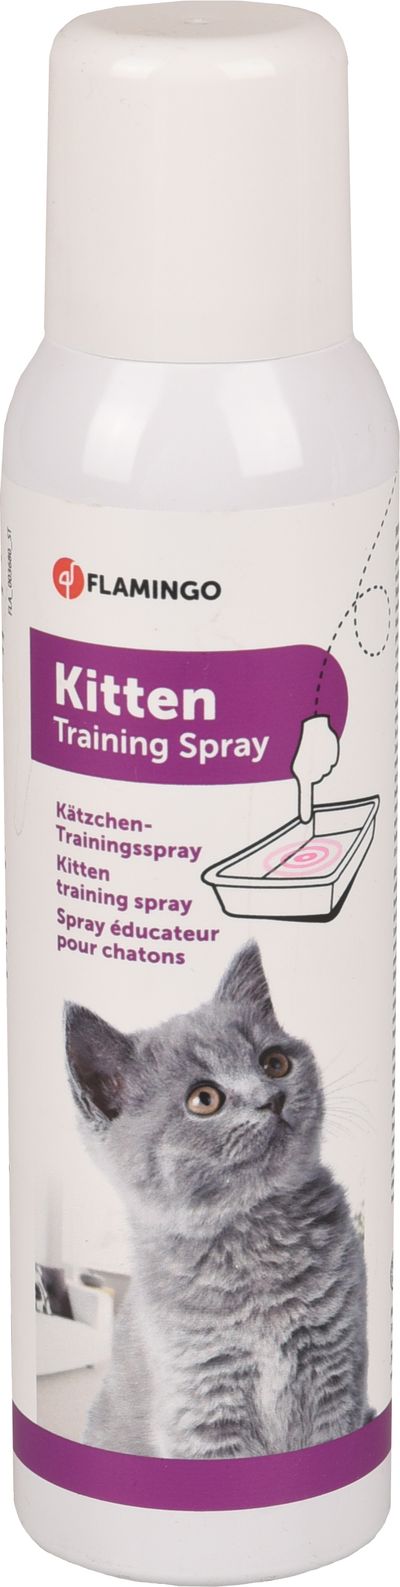 Kitten trainingsspray 120ml